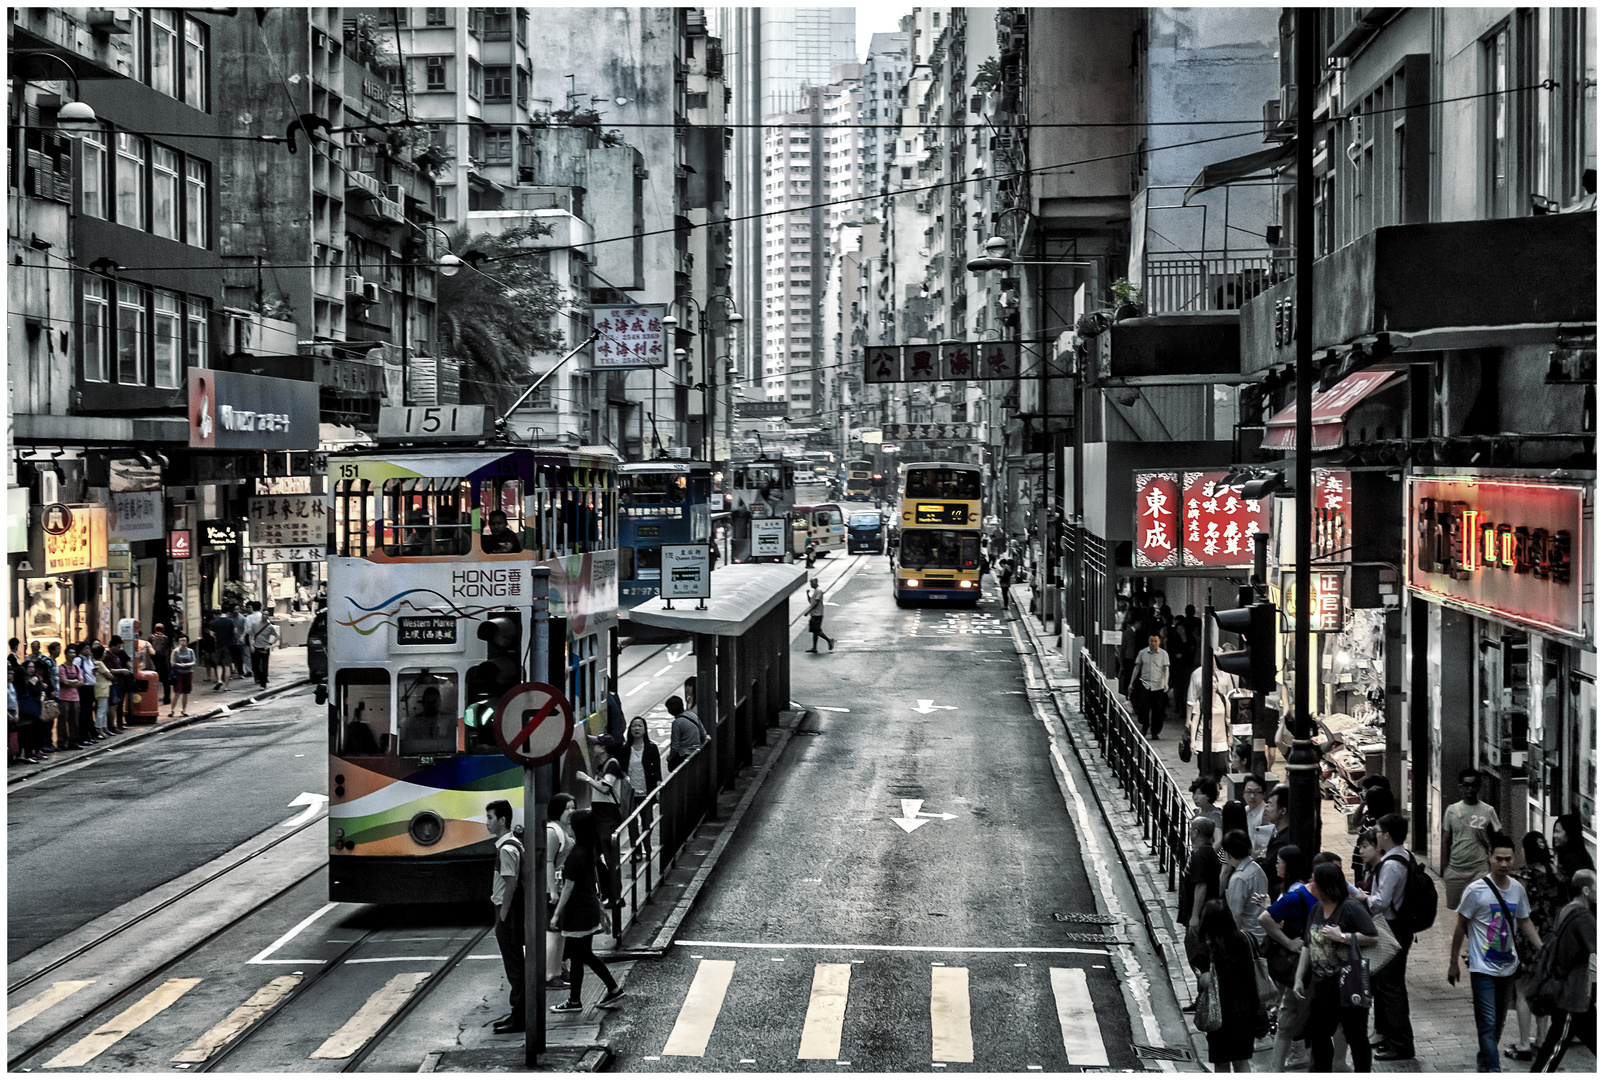 Hongkong Street 2